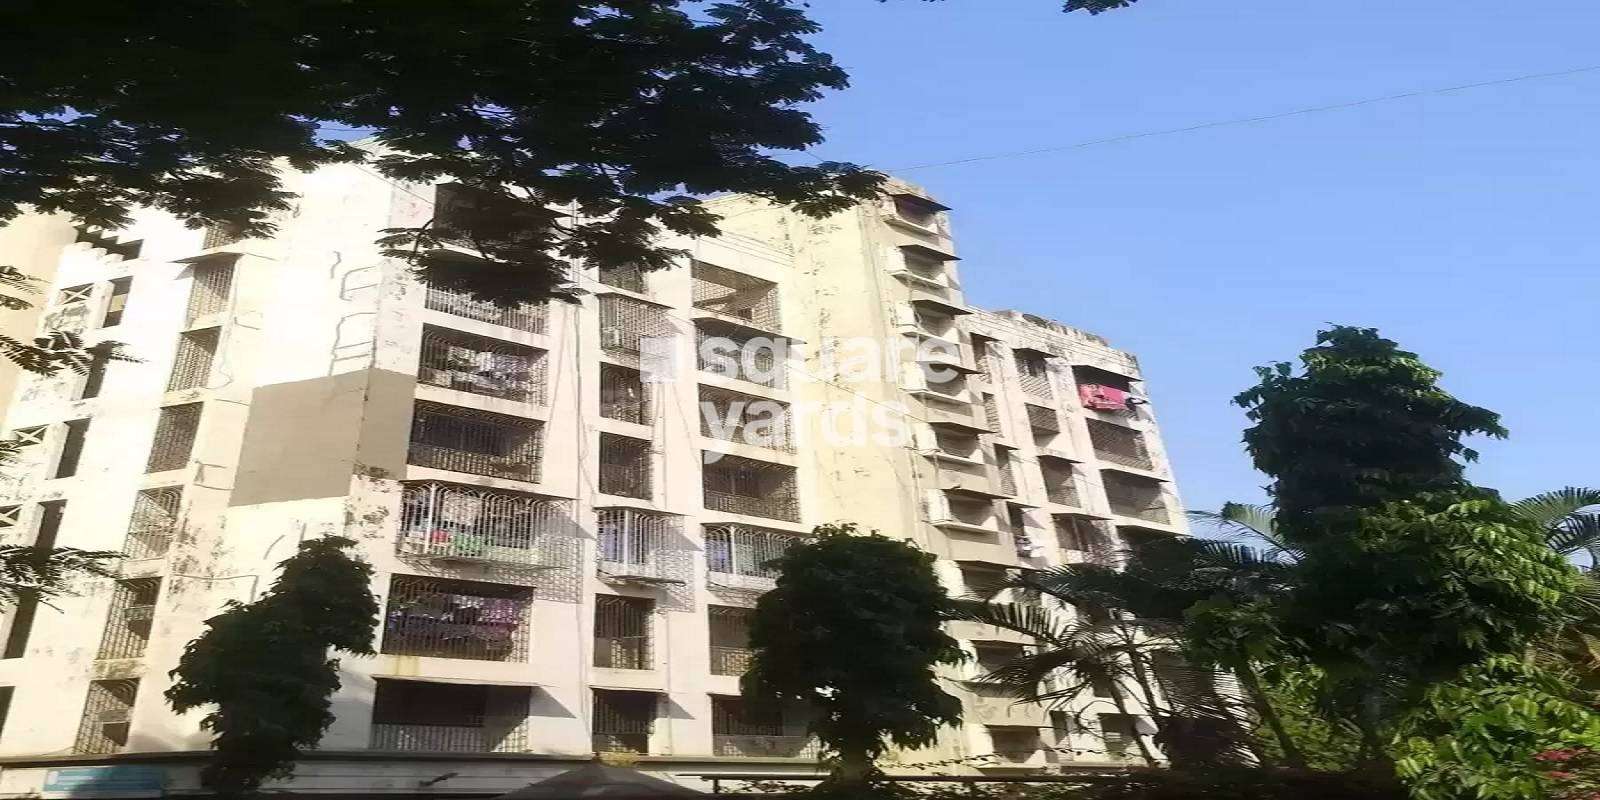 Sahyadri Apartment Malad Cover Image